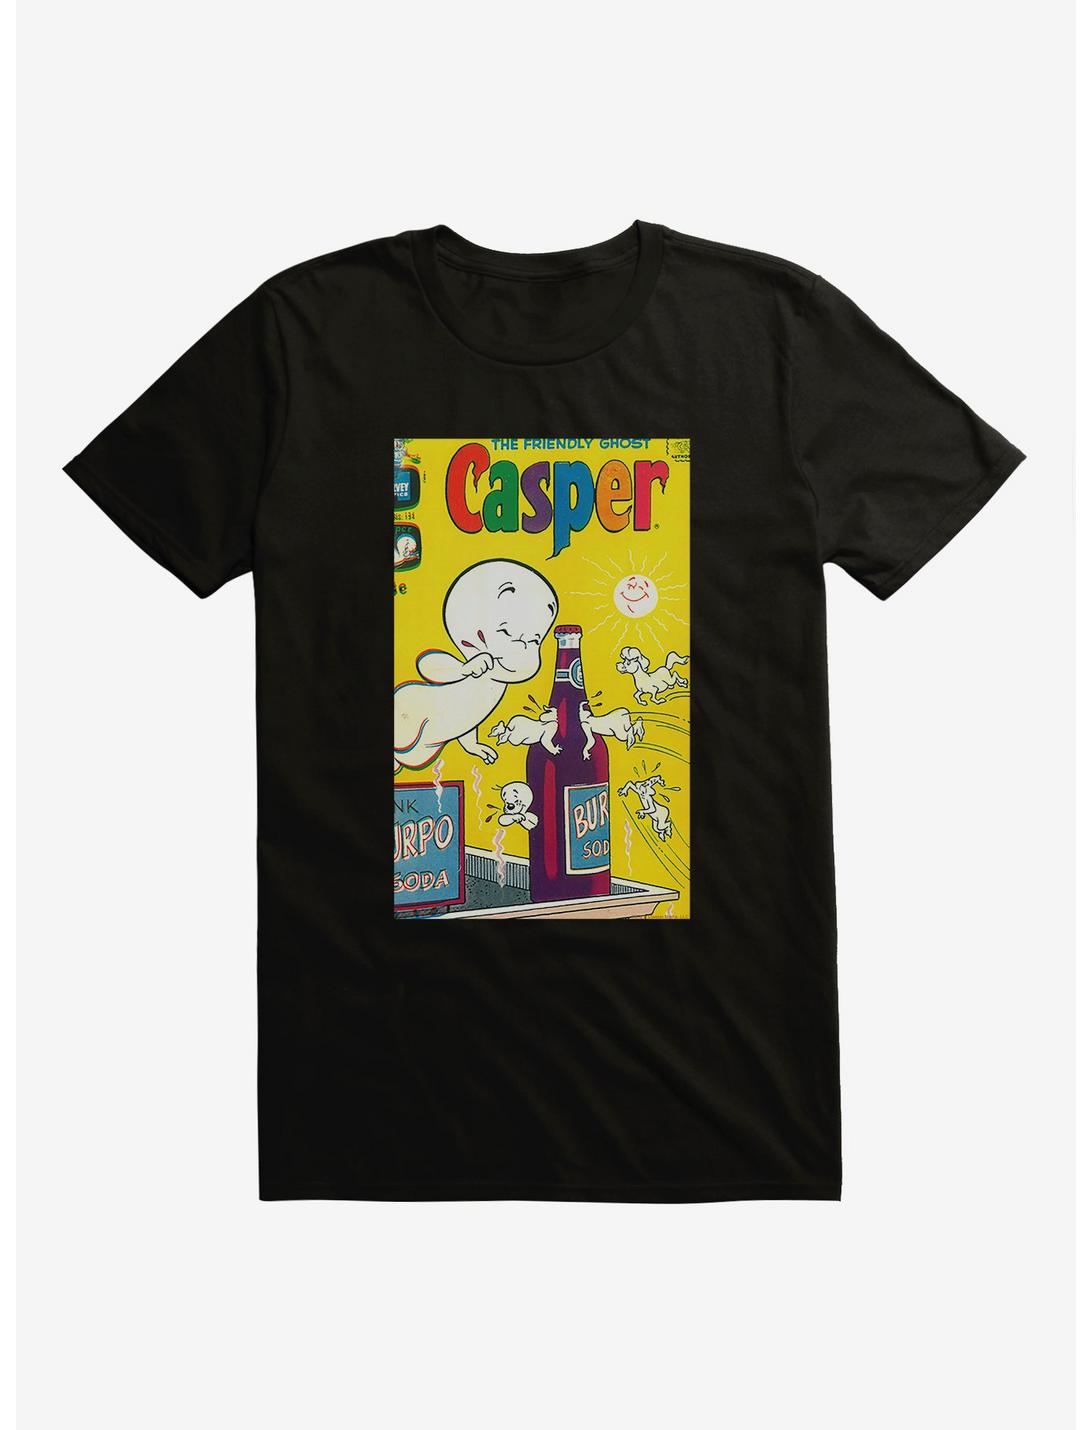 Casper The Friendly Ghost Burpo Soda T-Shirt, BLACK, hi-res